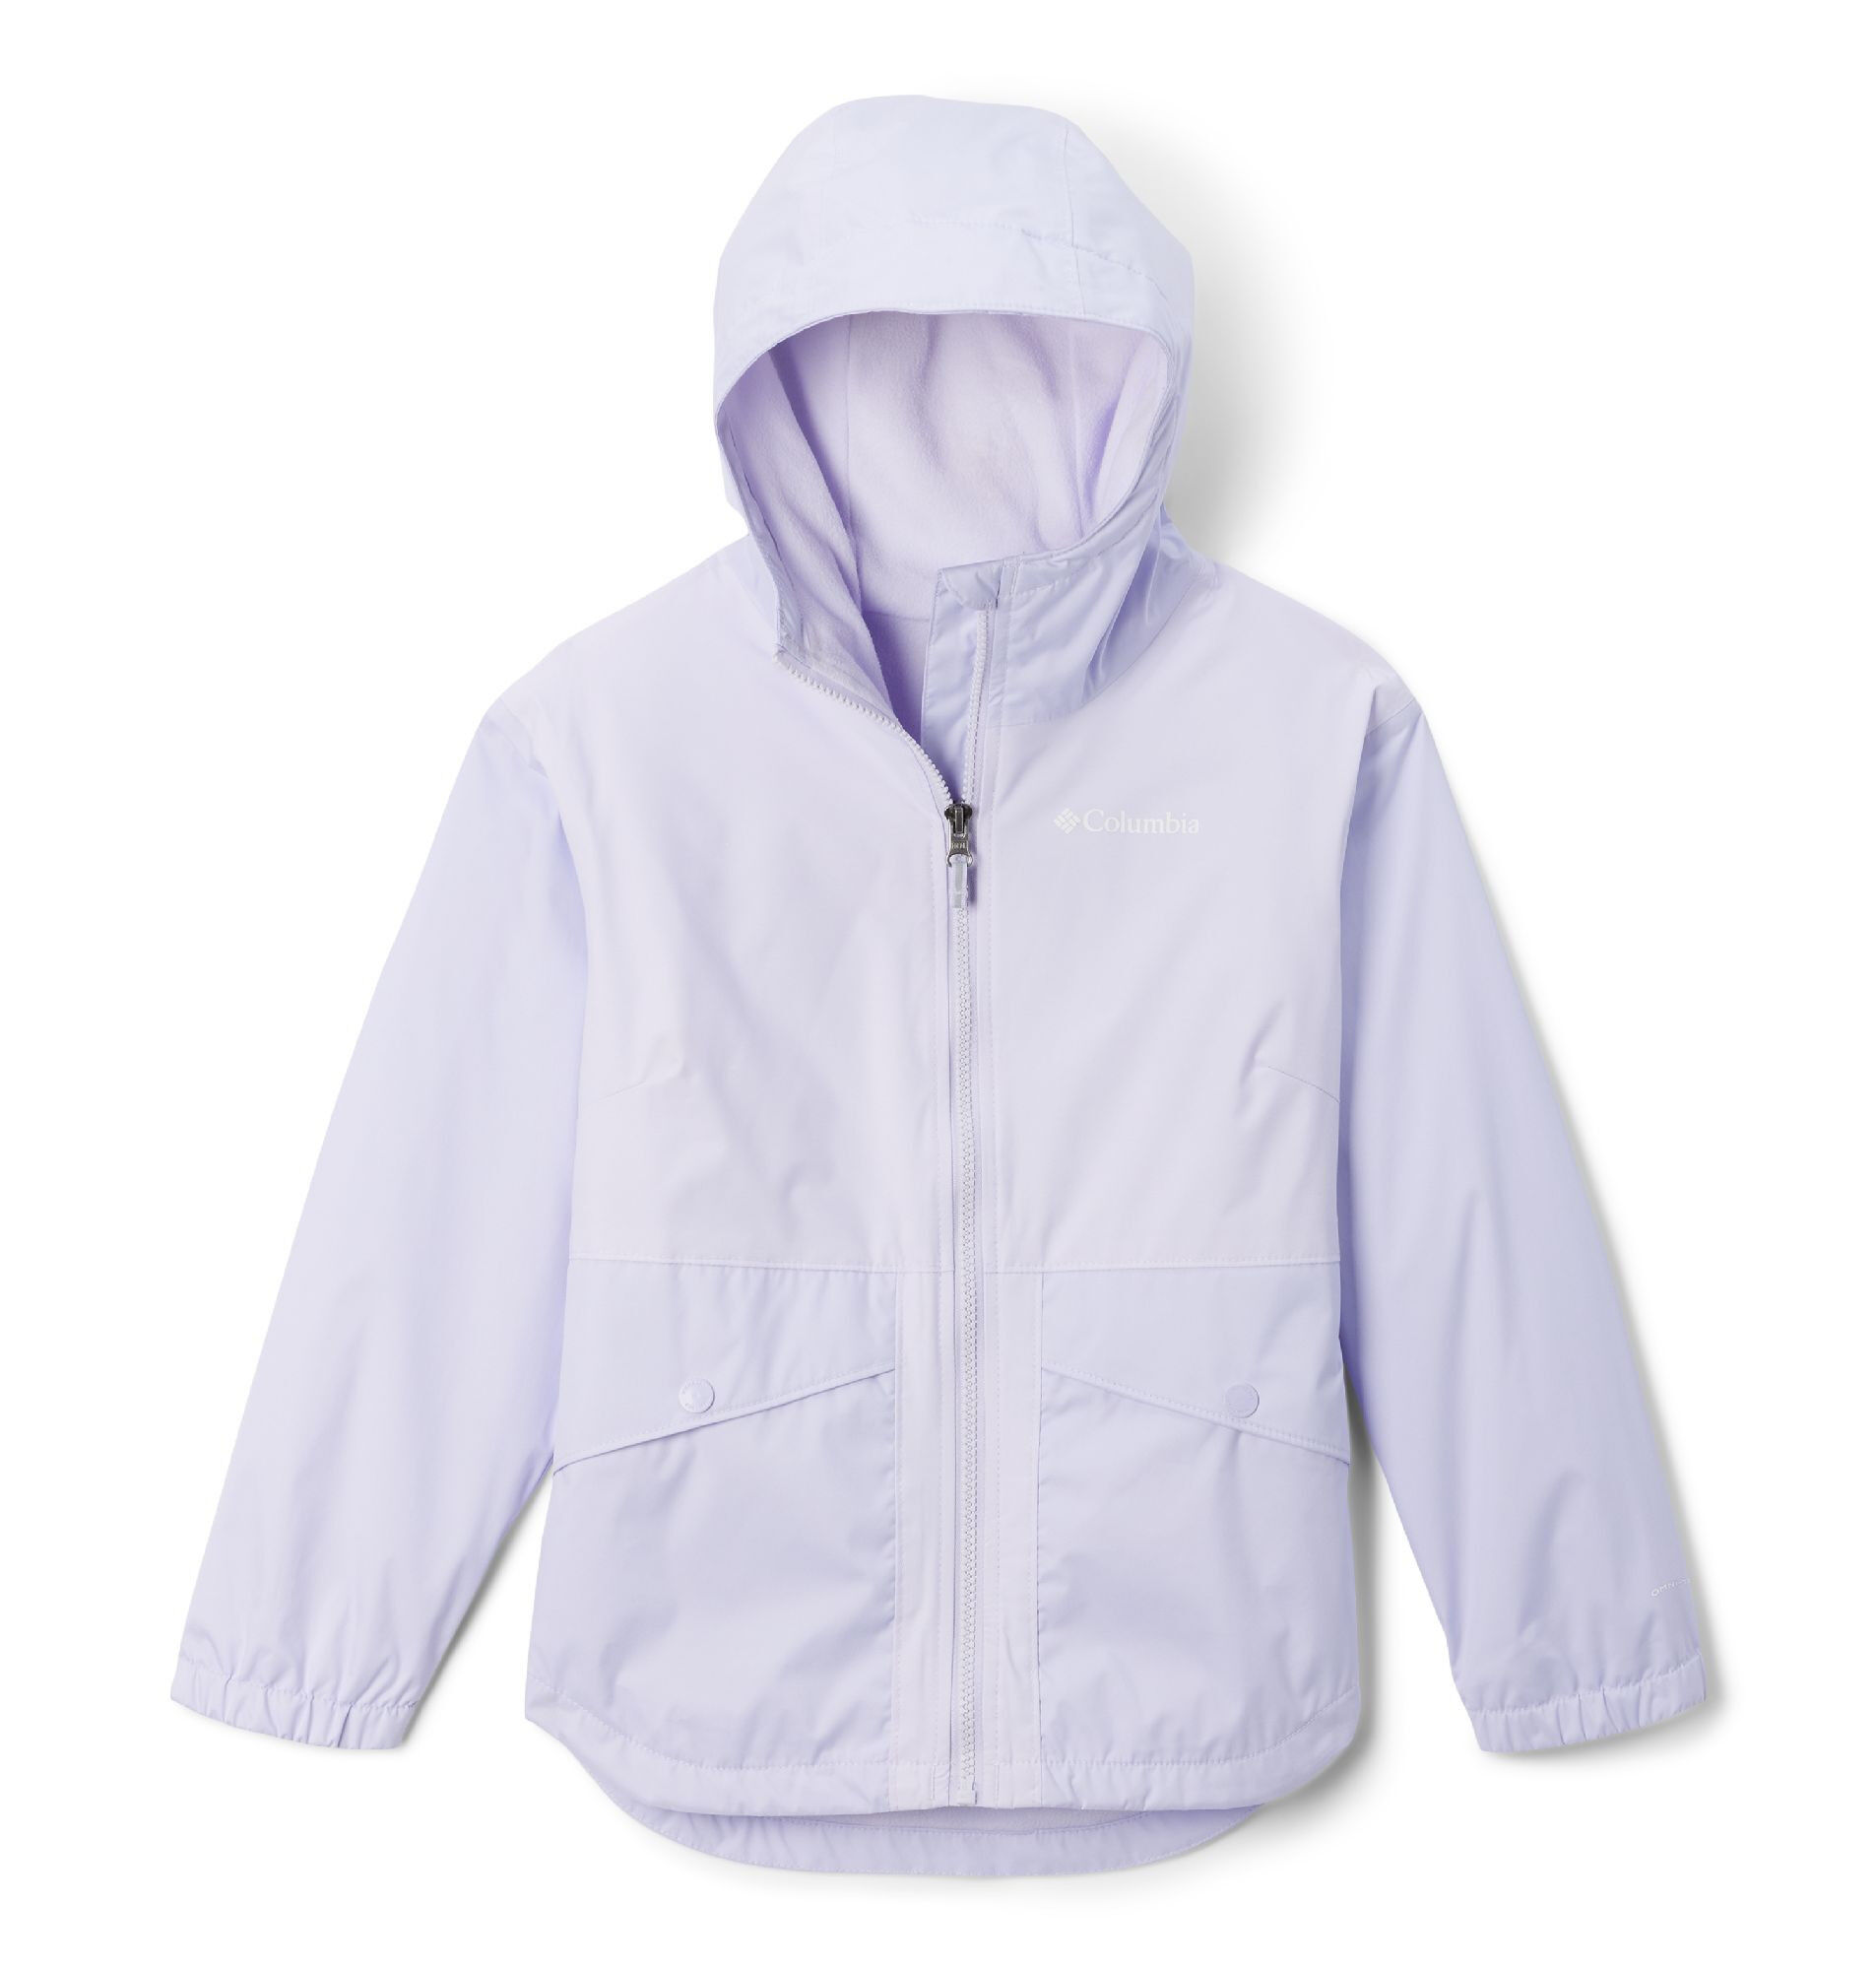 Columbia Rainy Trails Fleece Lined Jacket - Chaqueta impermeable - Niños | Hardloop